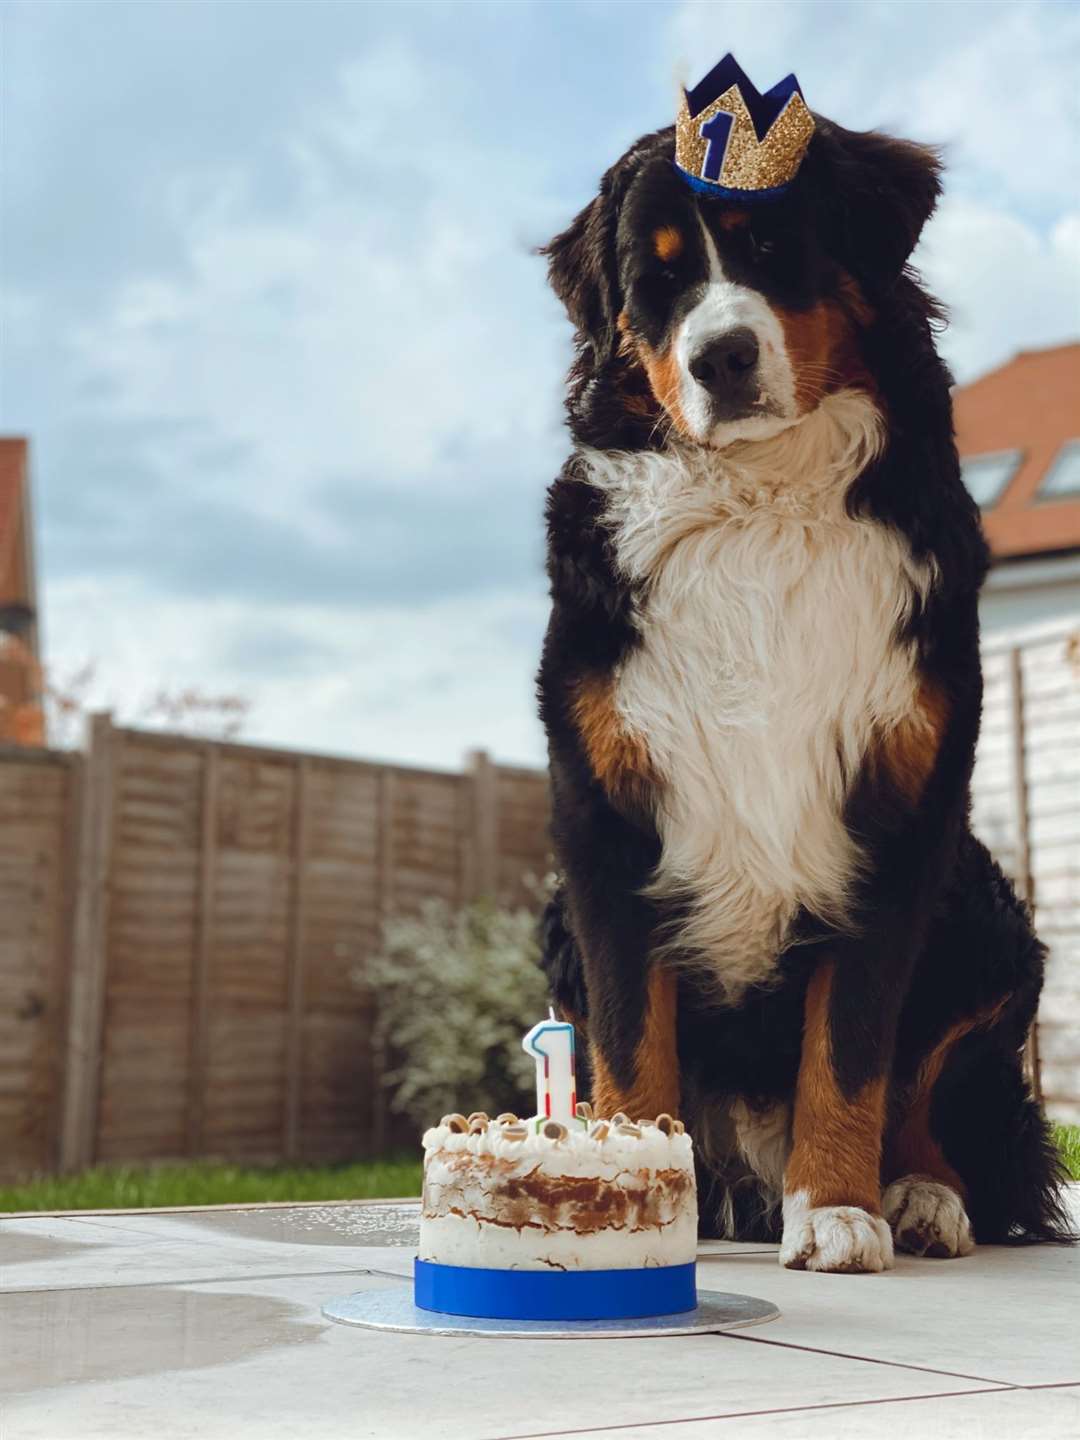 Hudson celebrating his first birthday